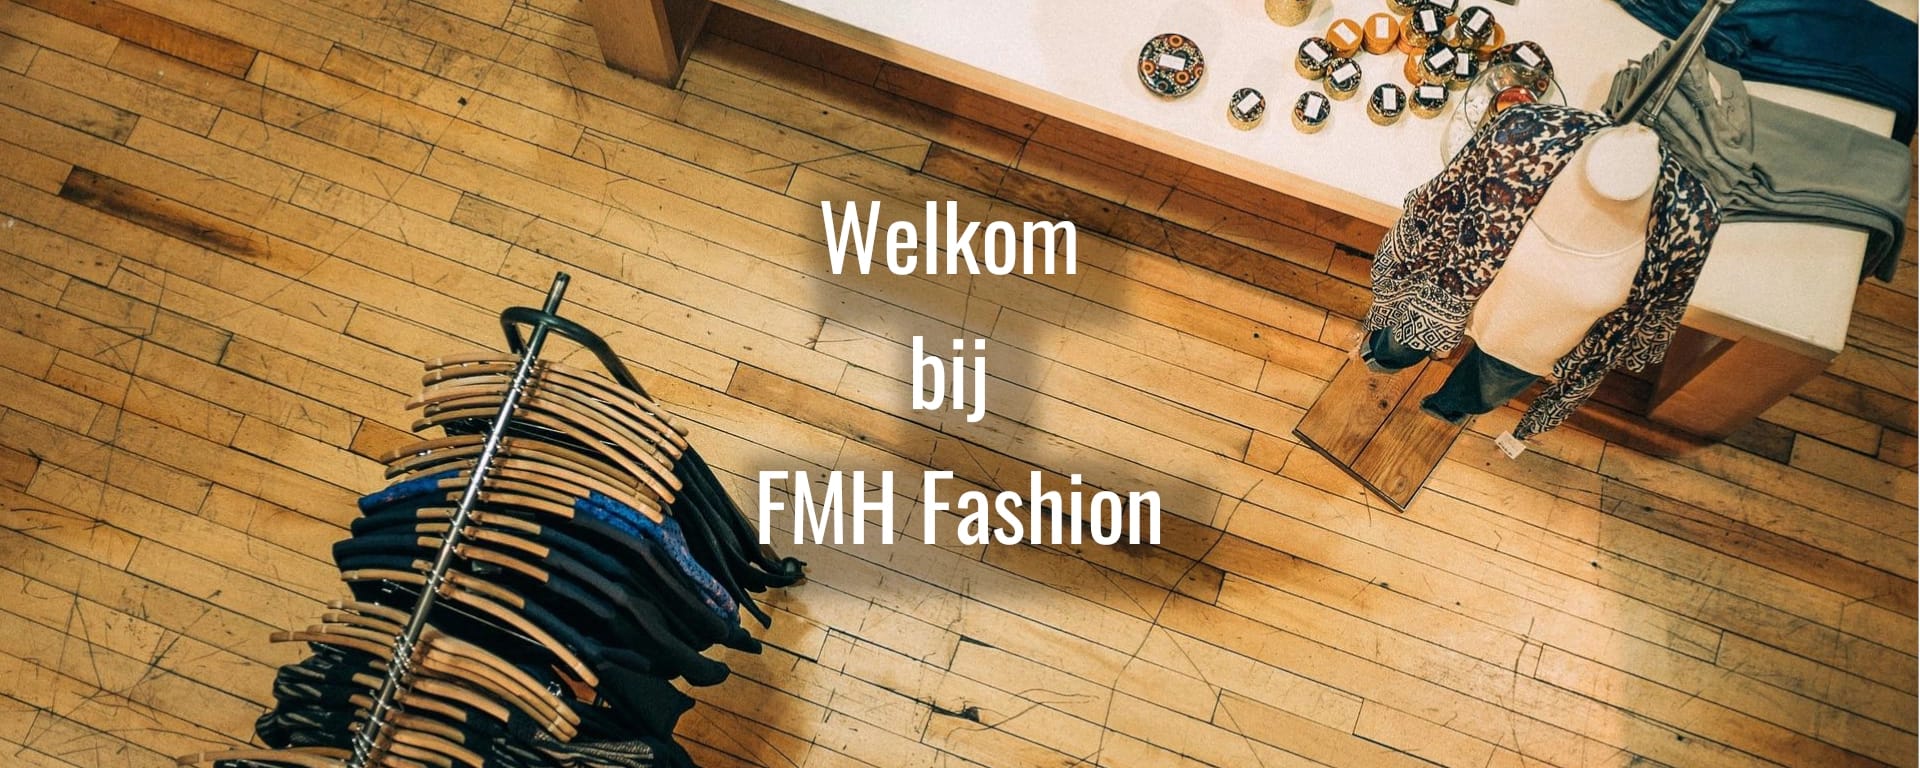 Welkom bij FMH Fashion